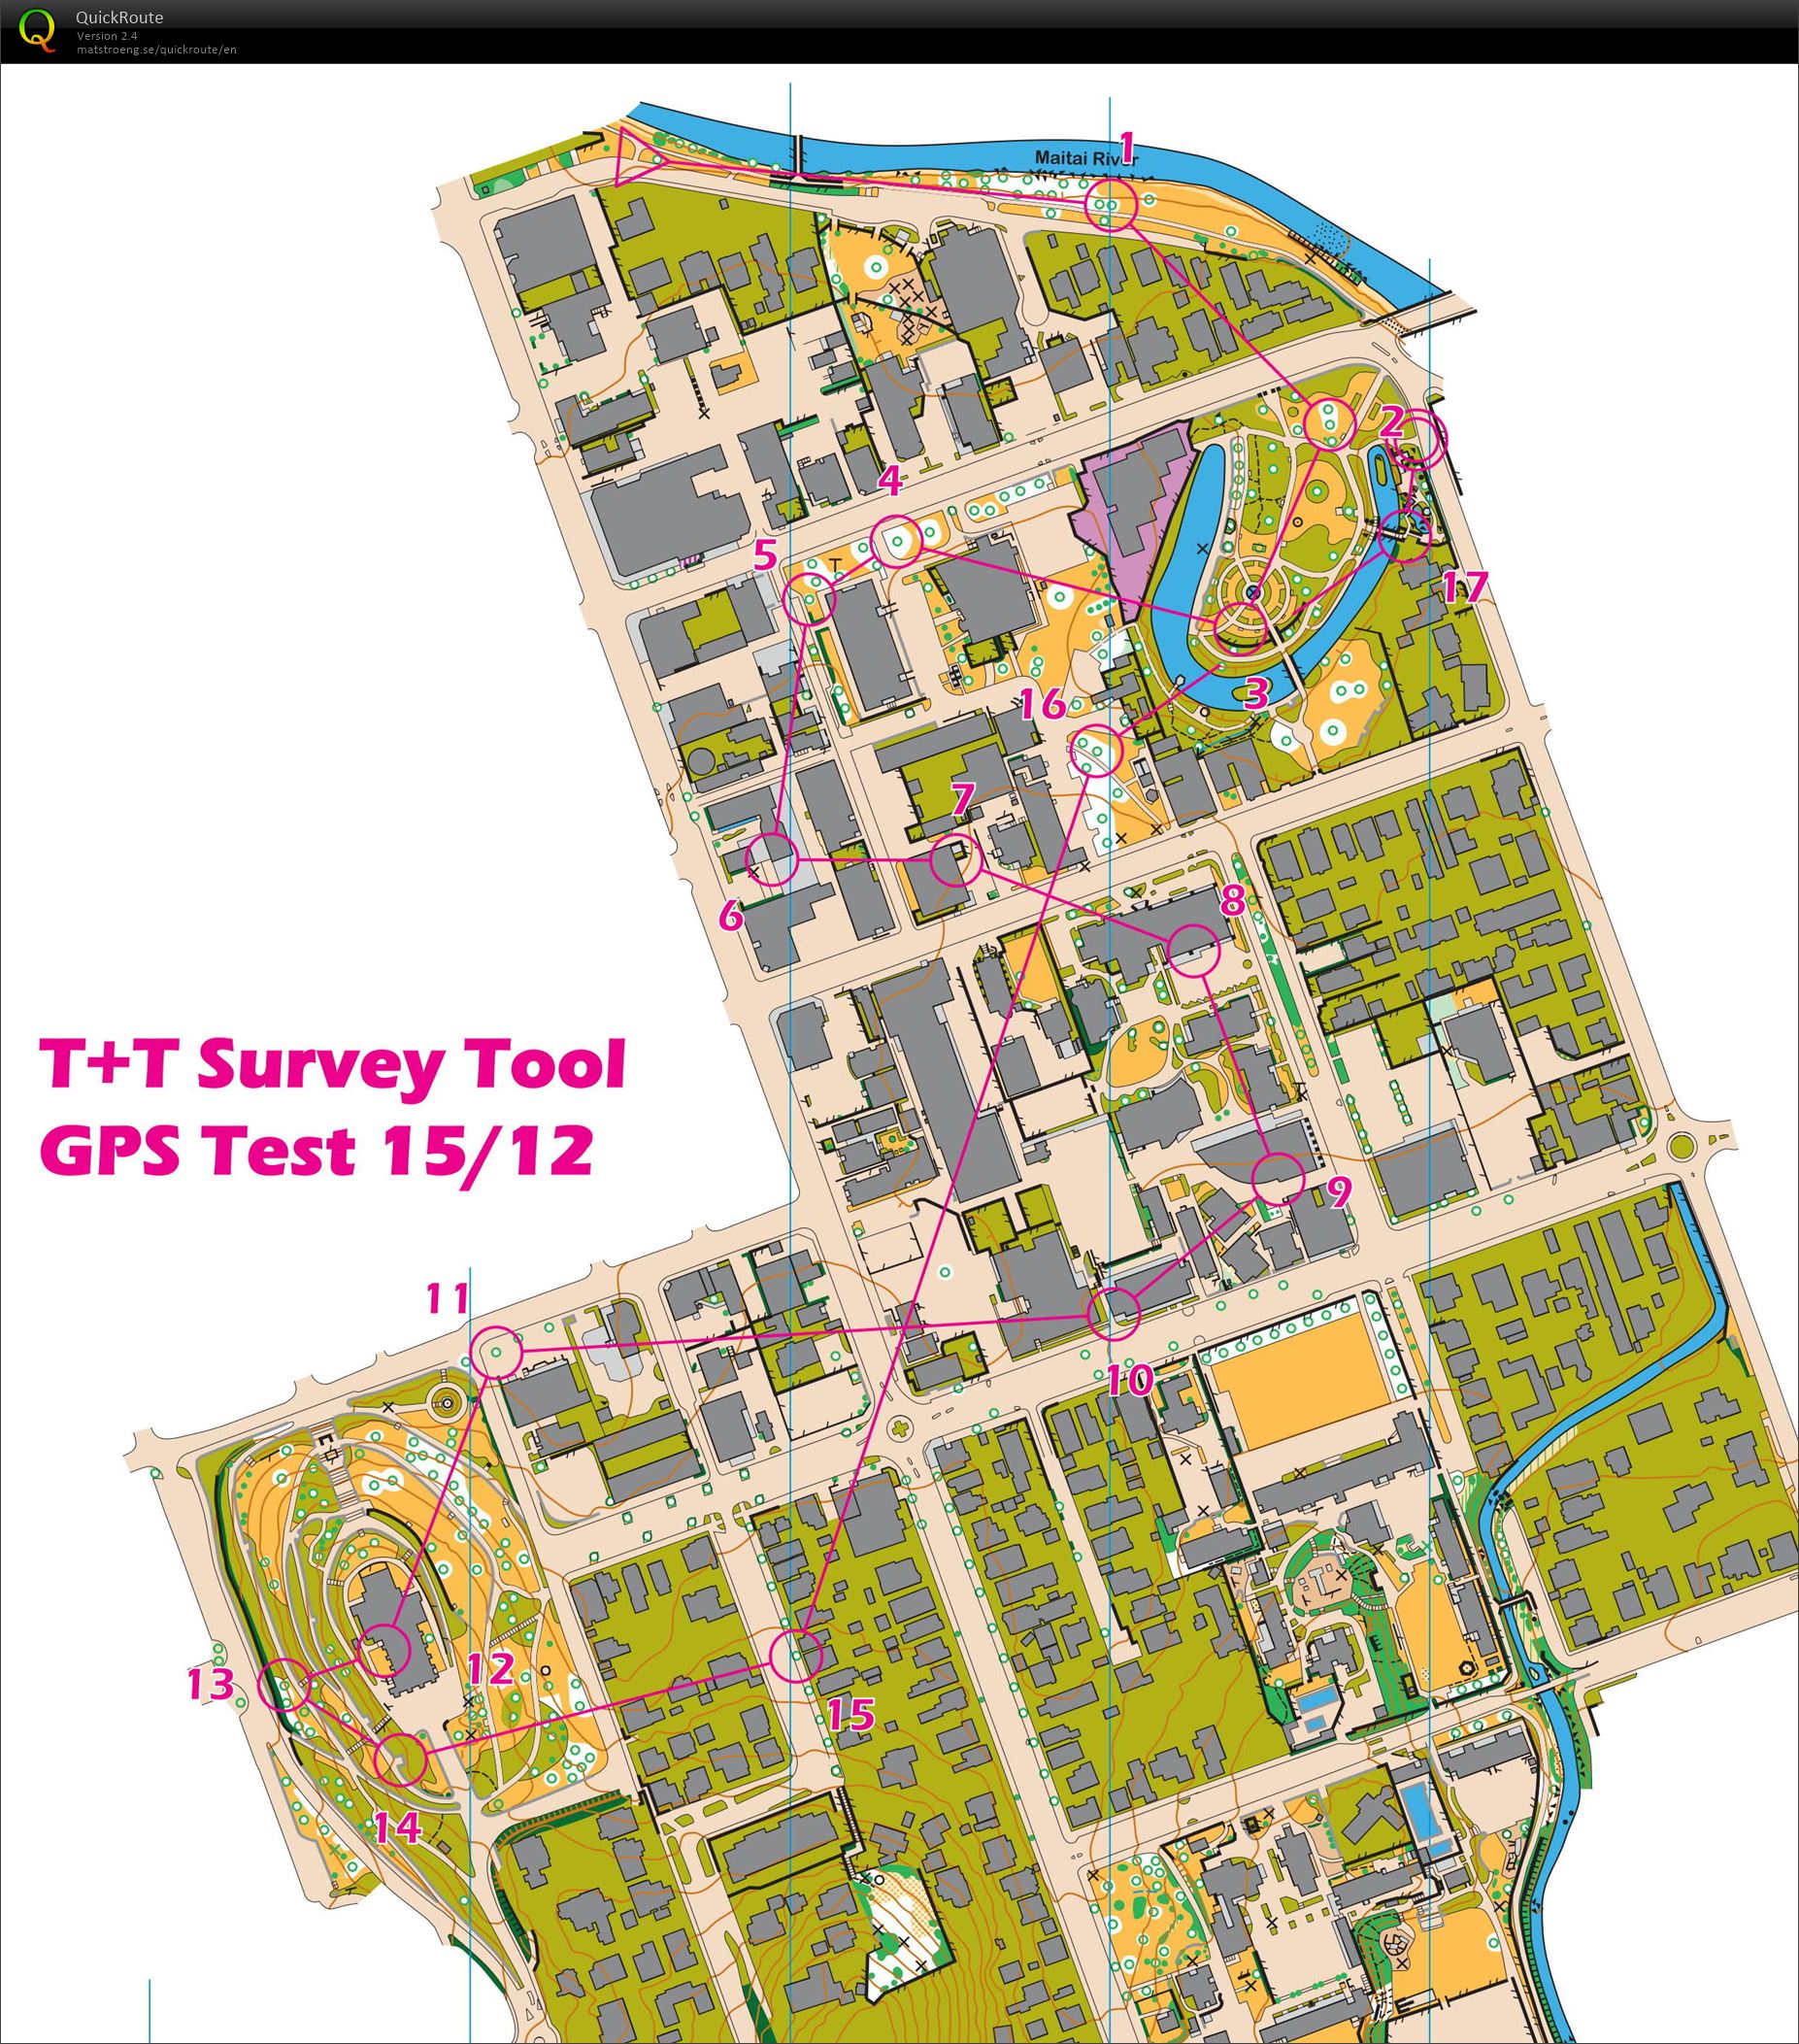 T+T Survey Tool Test (2020-12-14)